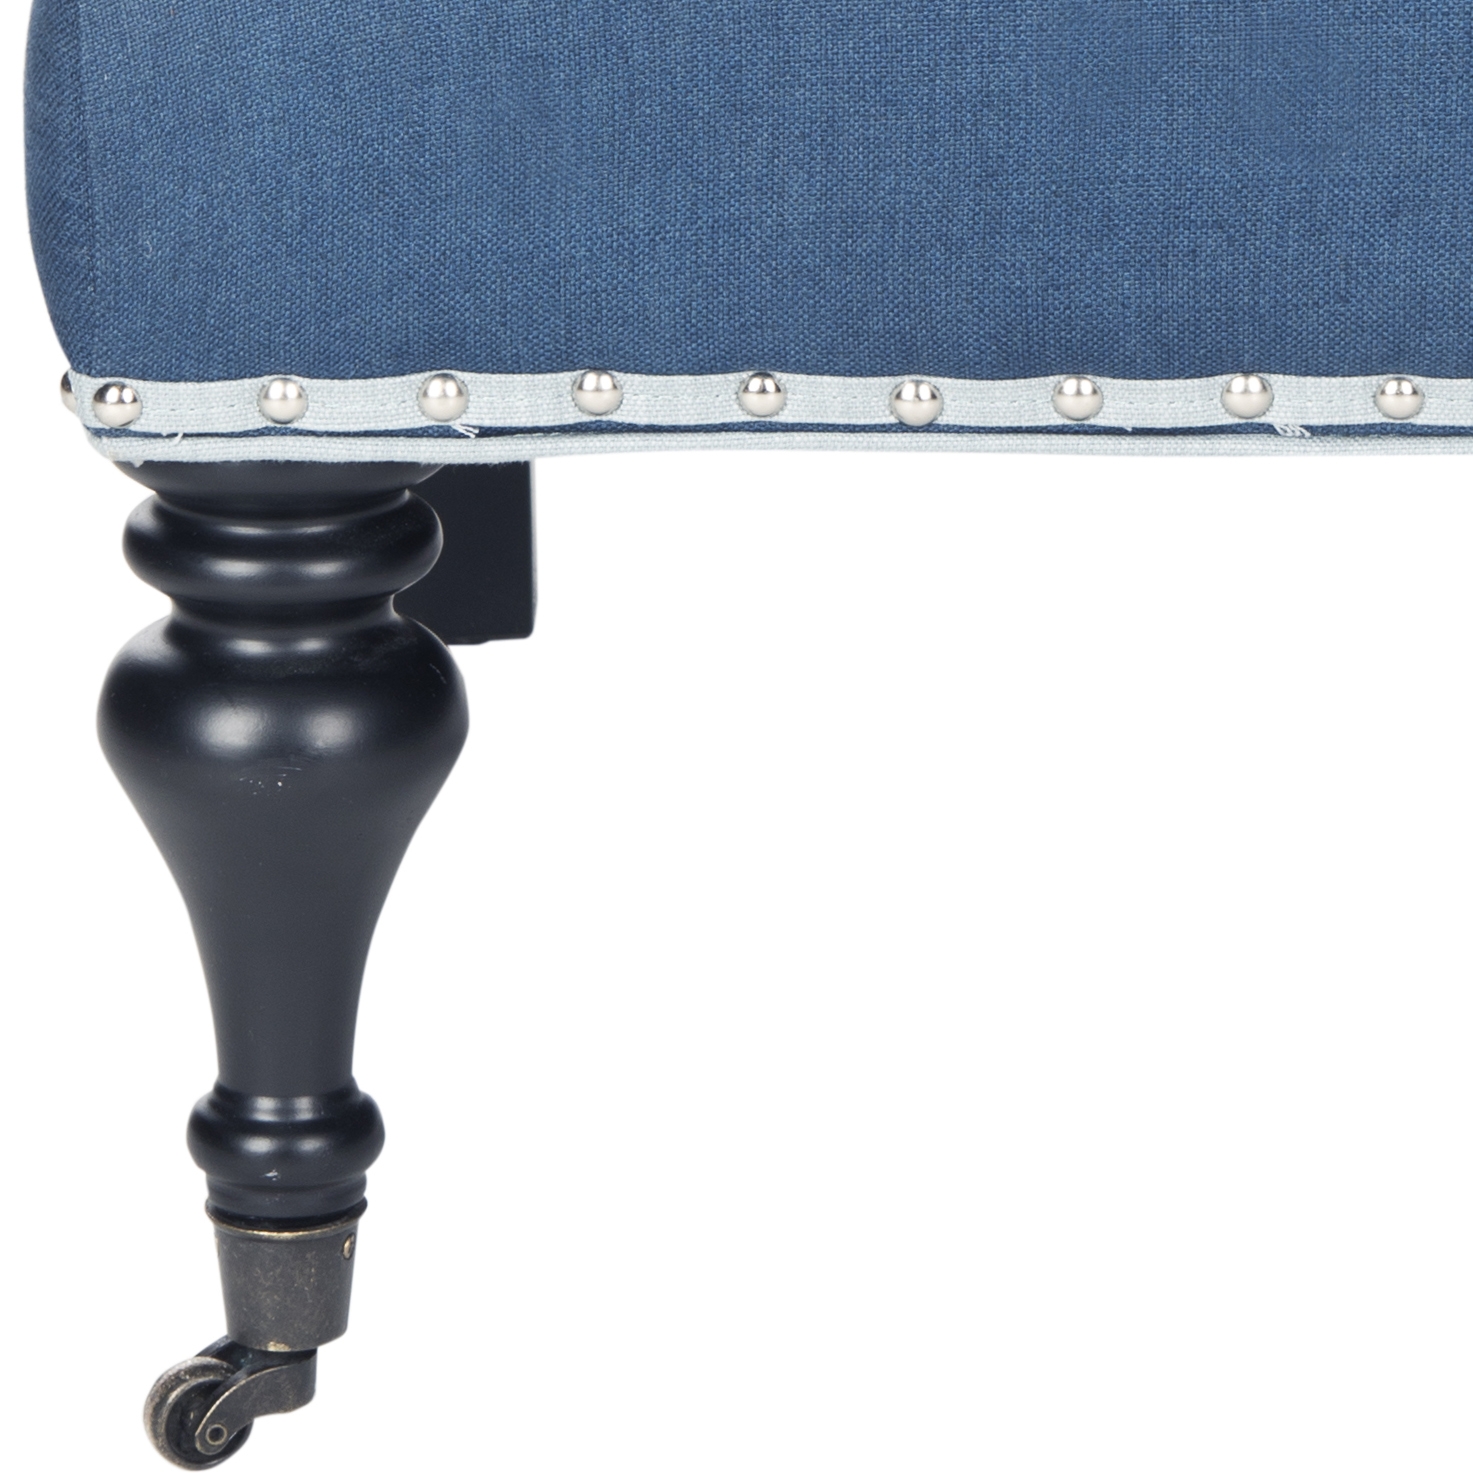 Devona Arm Chair - Silver Nail Heads - Steel Blue/Black - Arlo Home - Image 2